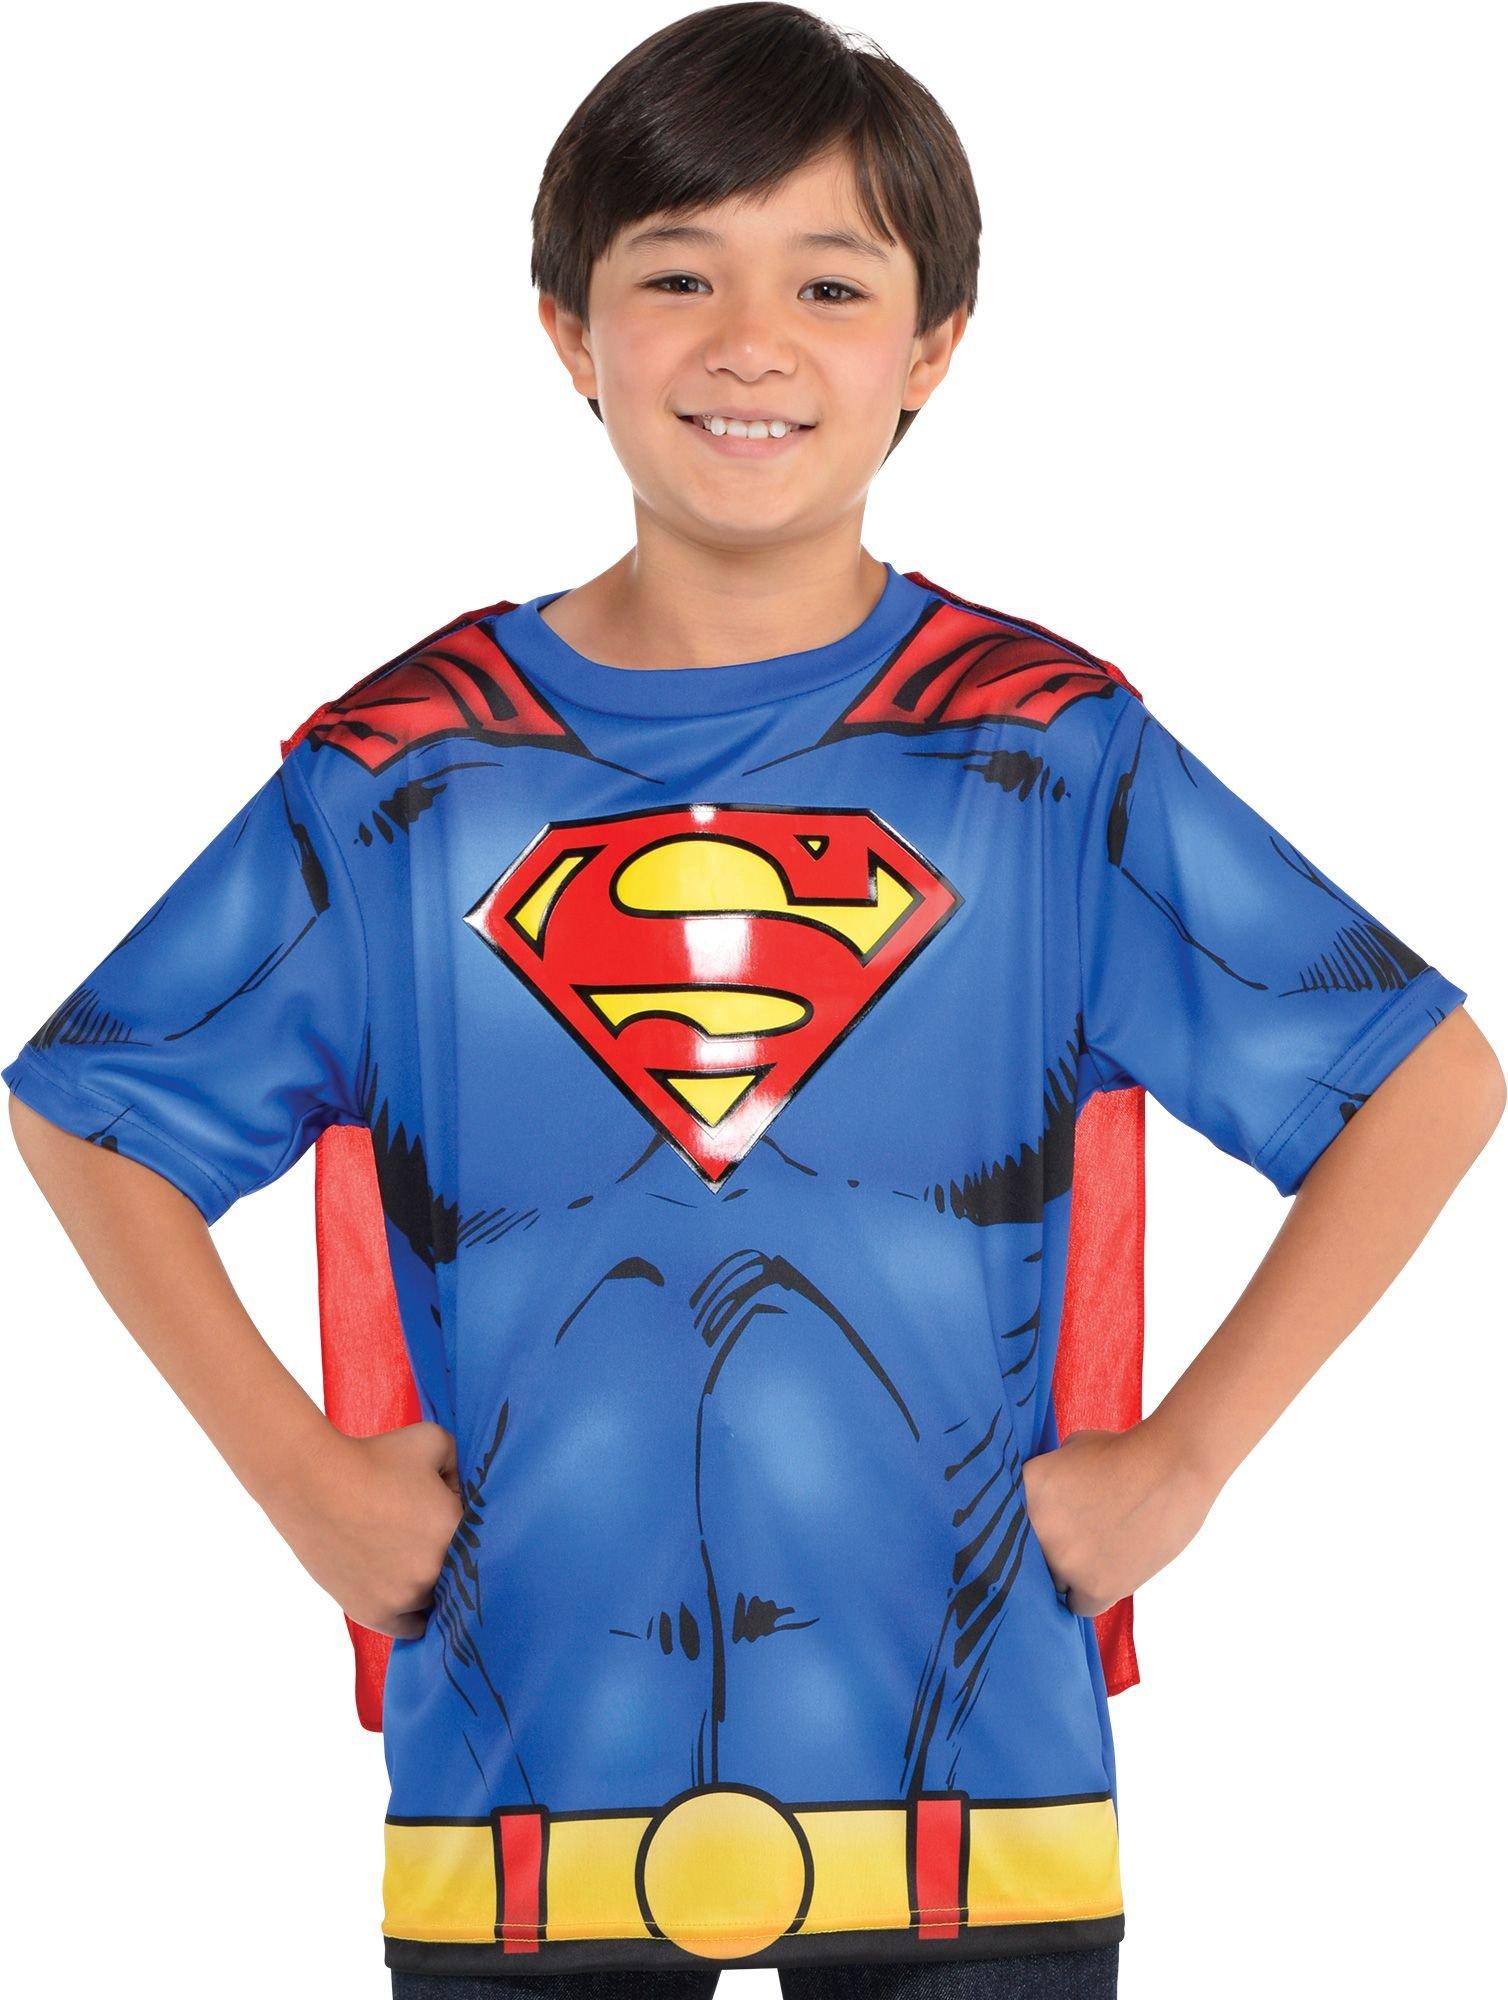 credit academisch Zeg opzij Child Superman T-Shirt with Cape | Party City